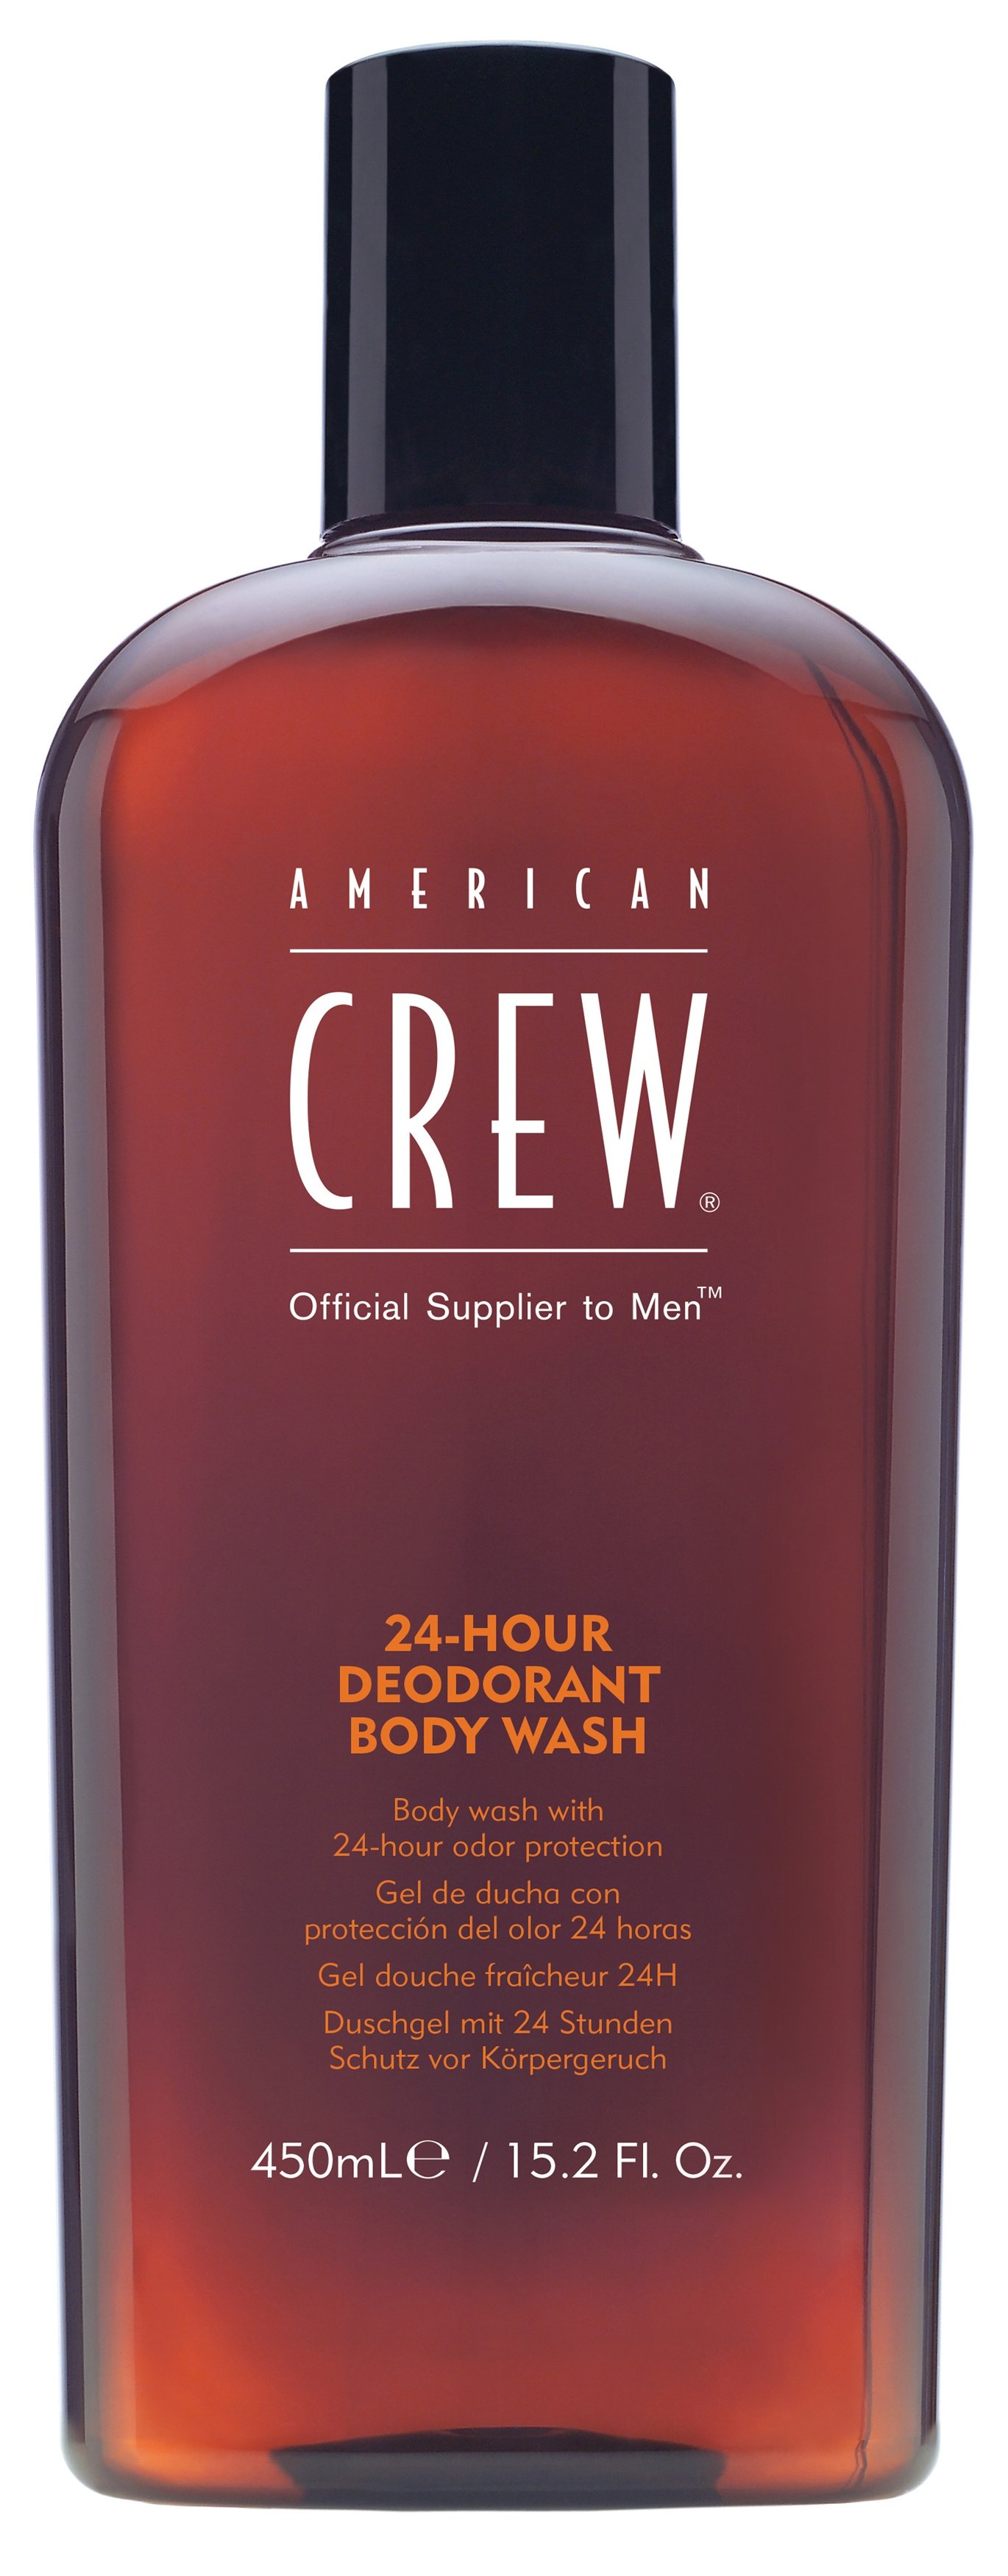 Гели для душа:  AMERICAN CREW -  Гель для душа дезодорирующий 24-HR American Crew Deodorant Body Wash (450 мл) (450 мл)